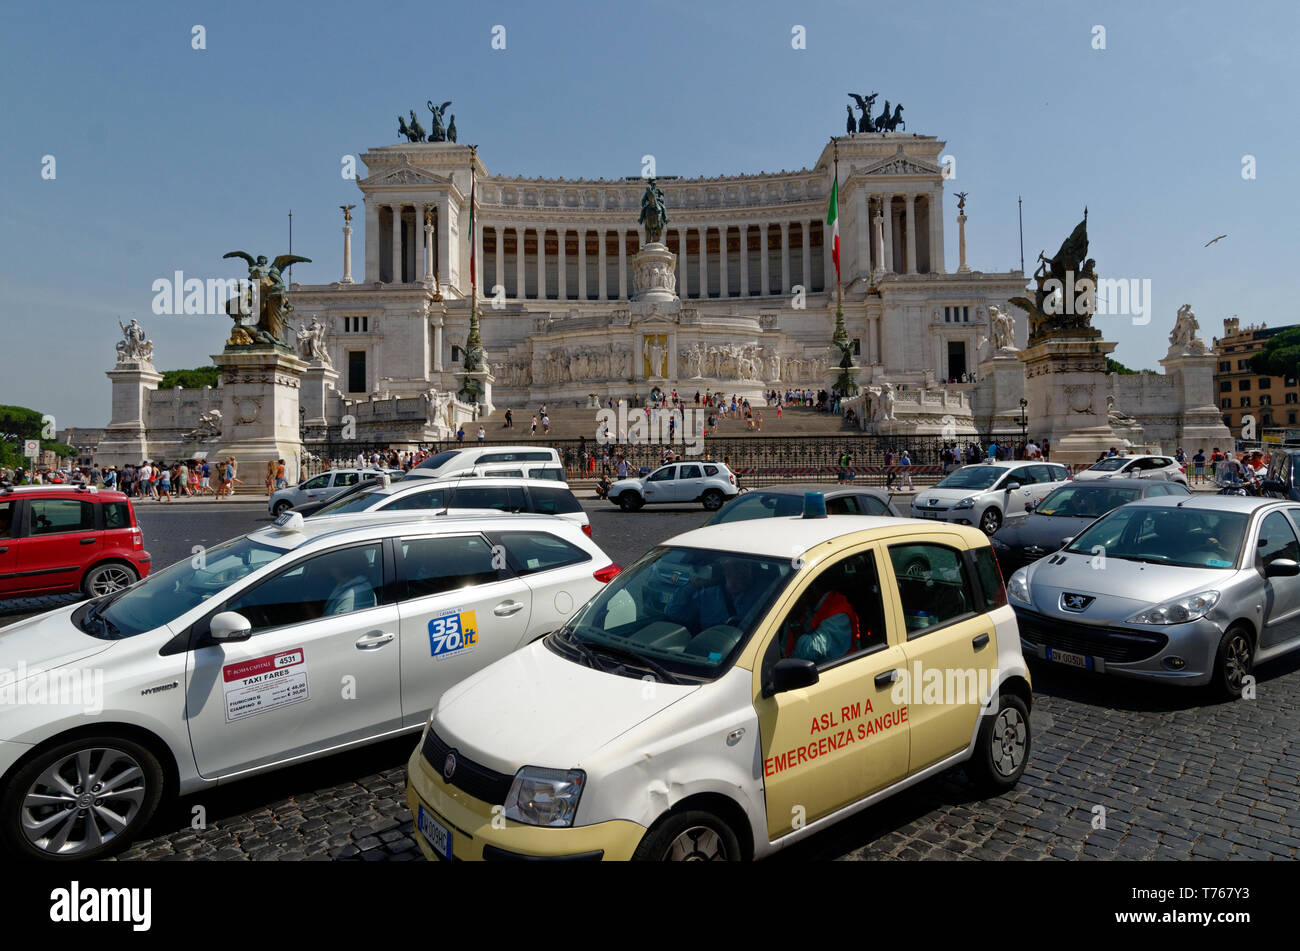 Looking across the traffic in Piazza Venezia to the Vittorio Emanuele II Monument (Altare della Patria or Altar of the Fatherland) Stock Photo